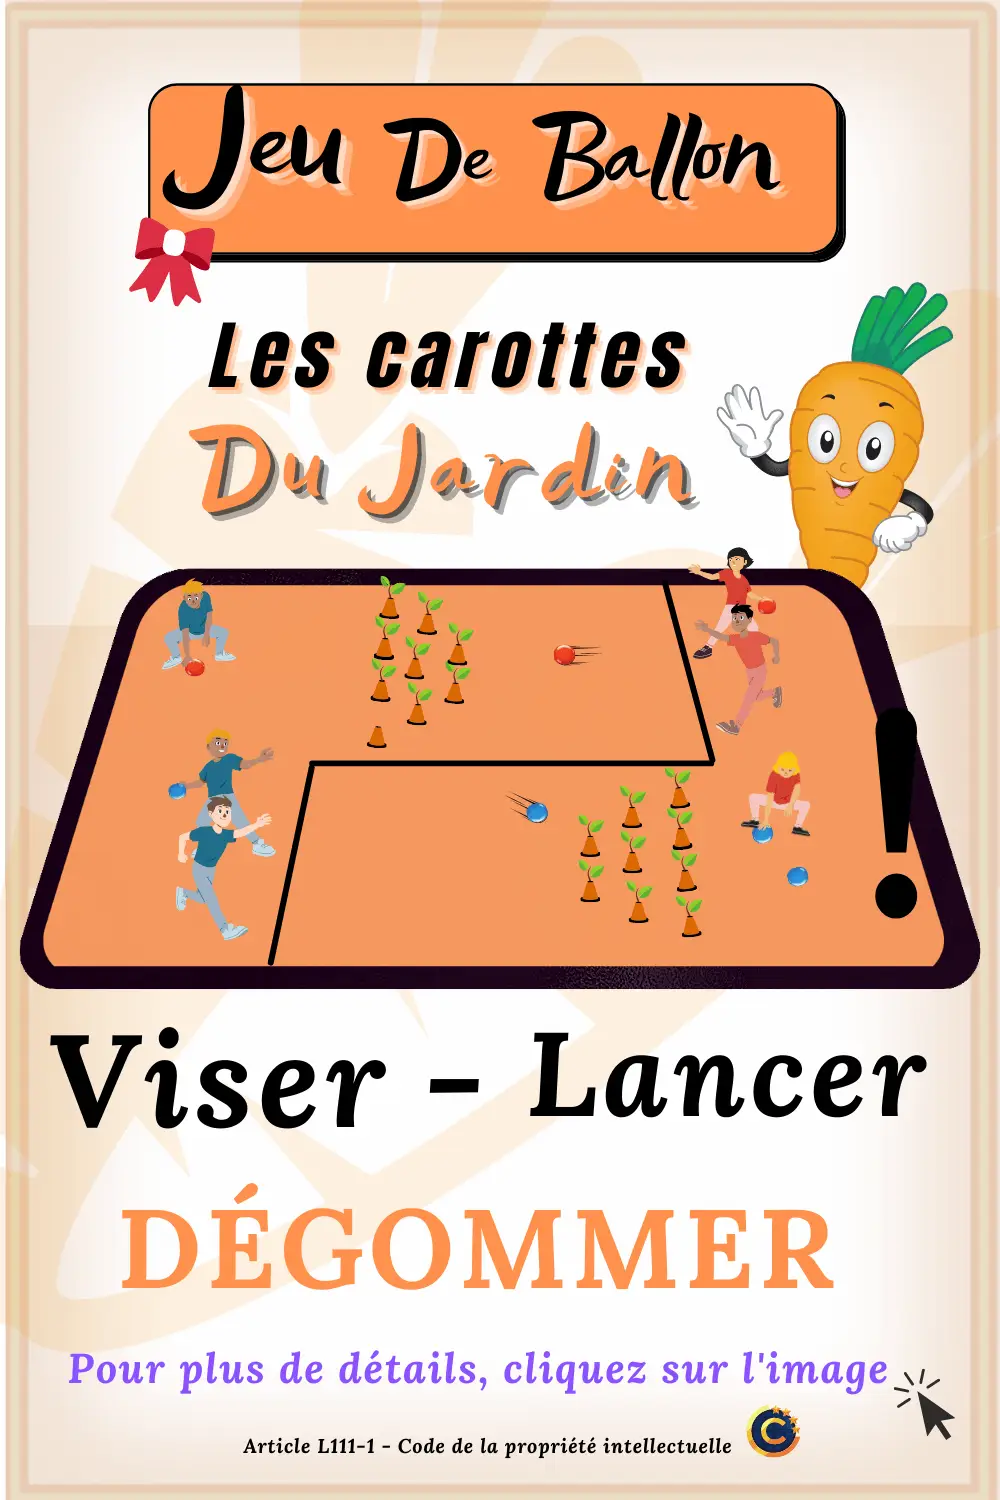 Les carottes du jardin - Children's ball game - Fun - game rules